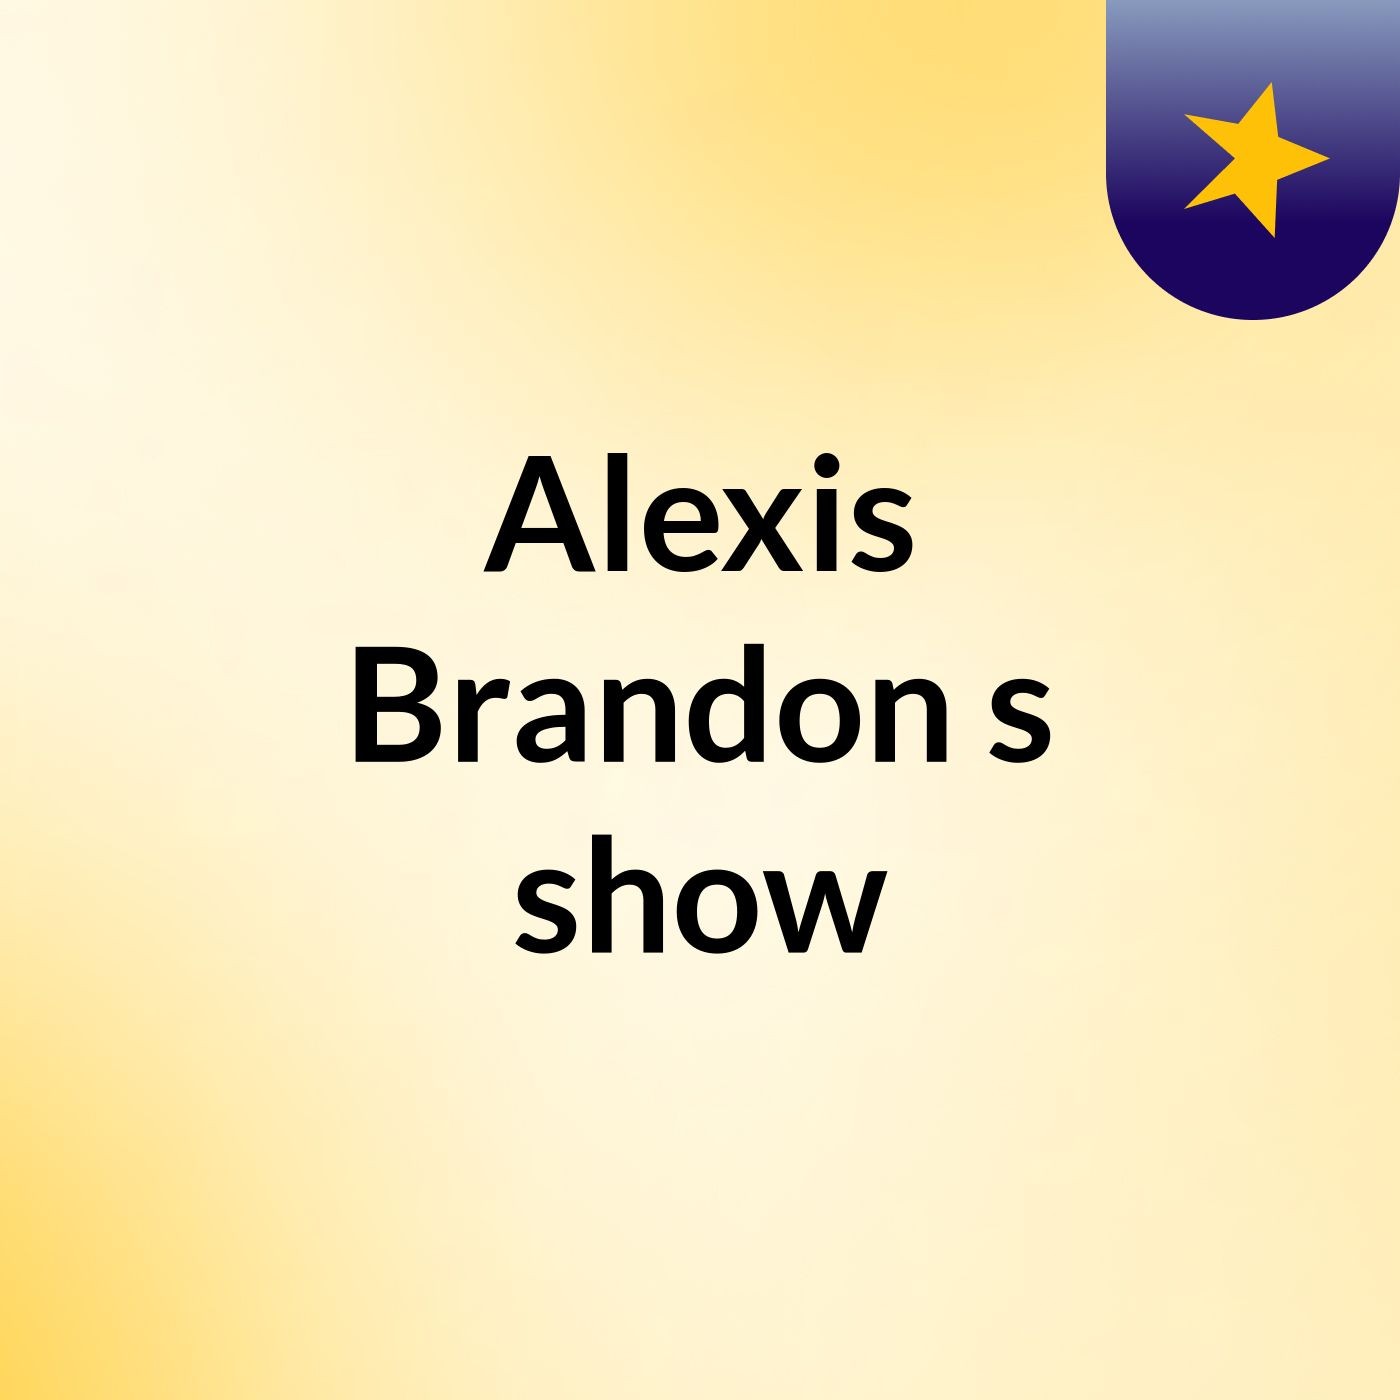 Alexis Brandon's show